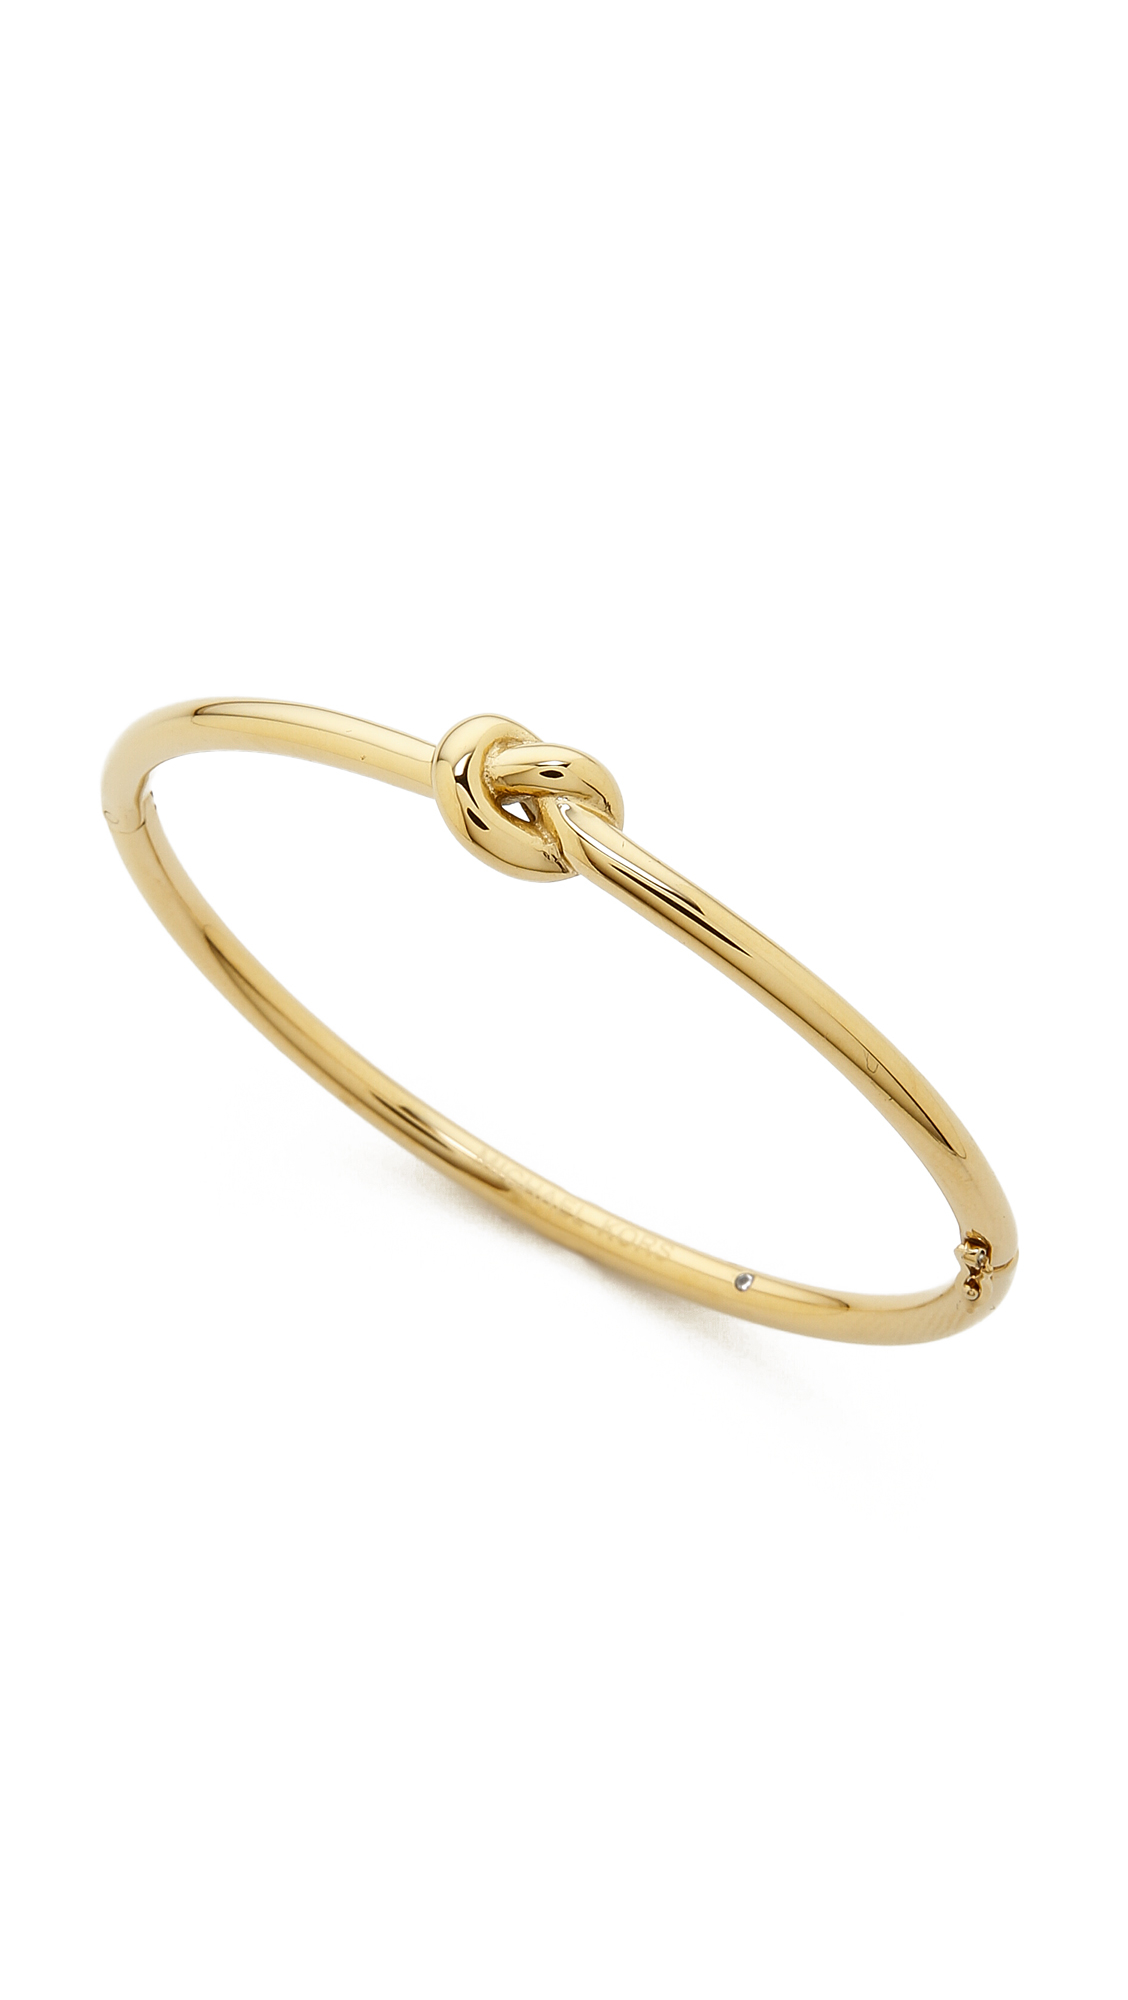 Michael Kors Knot Hinge Bracelet - Gold in Metallic | Lyst